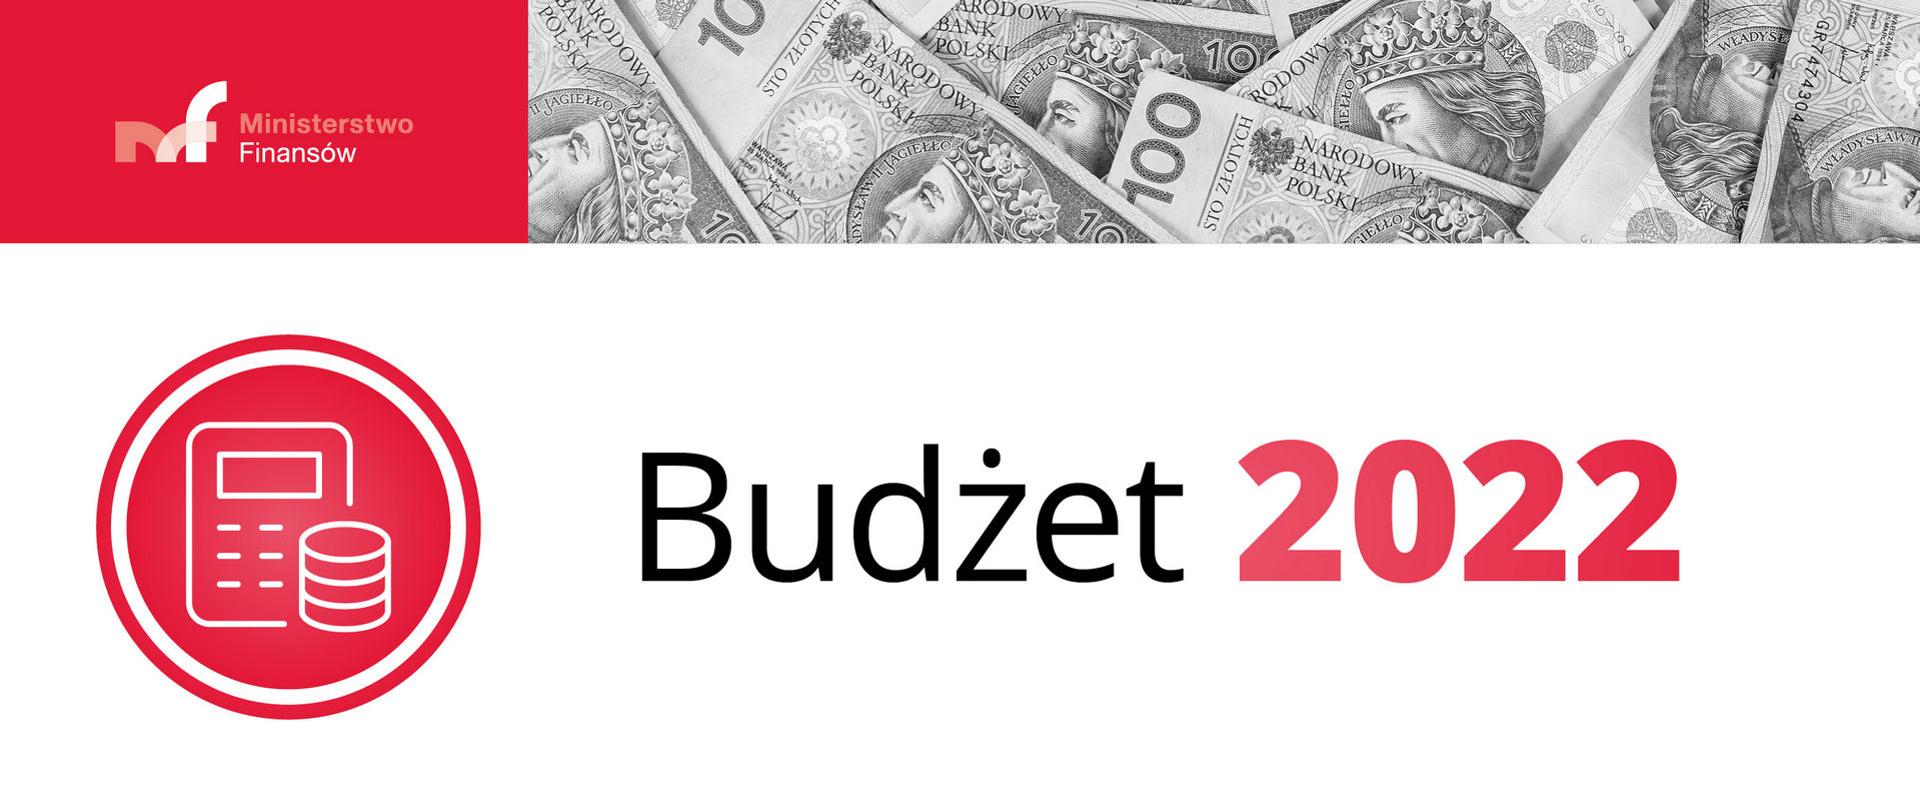 Grafika z logo MF, banknotami i napisem Budżet 2022.